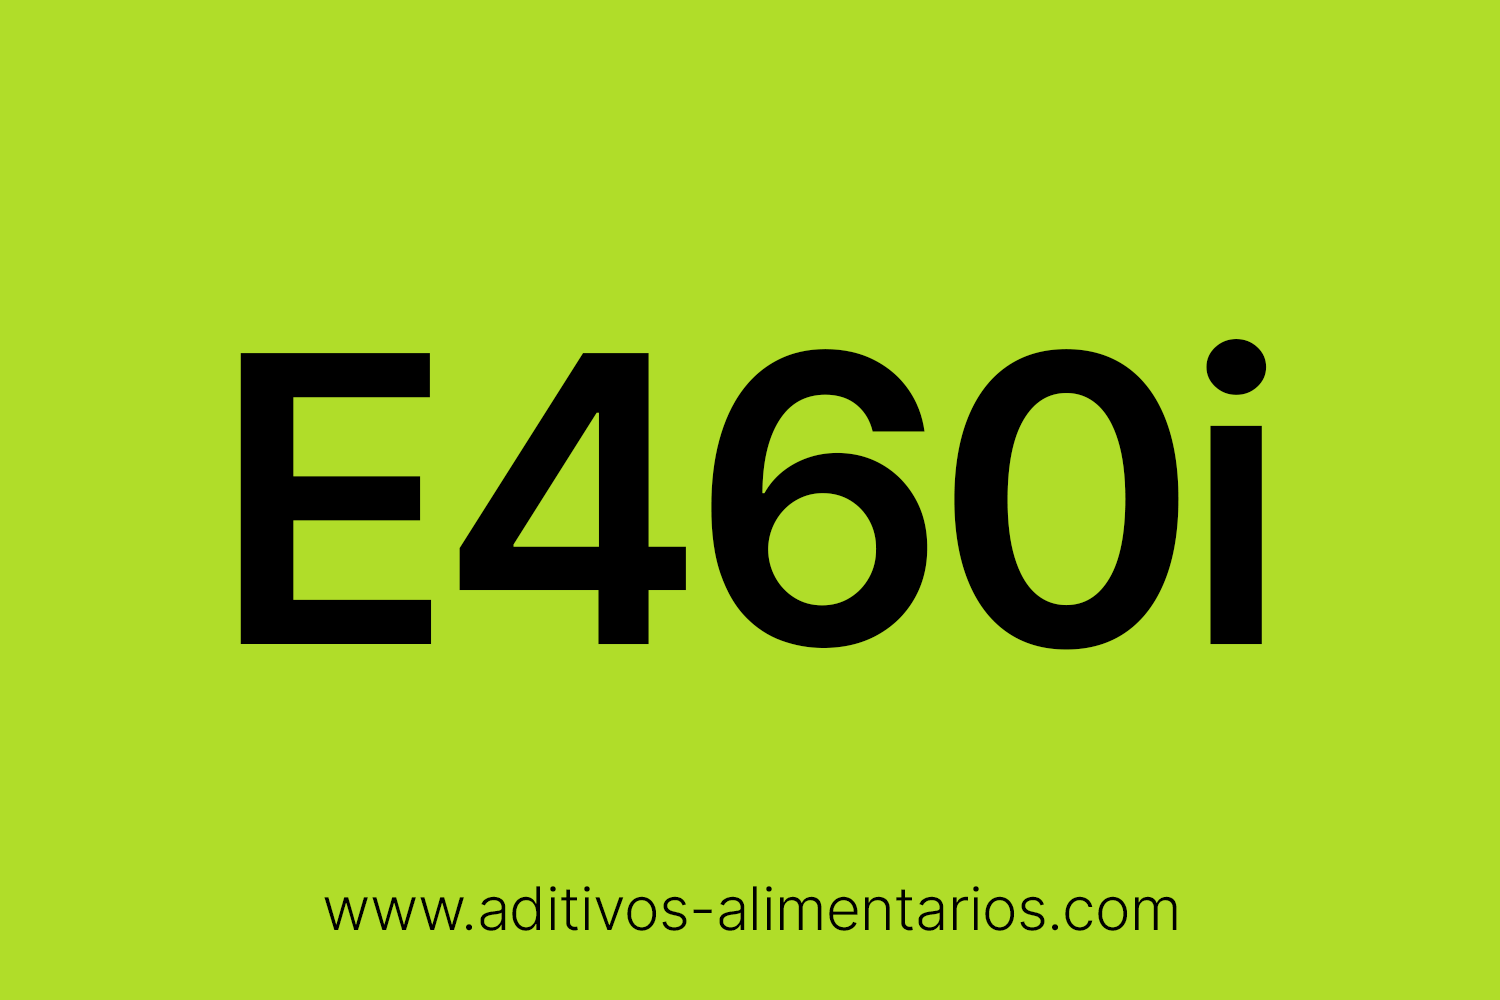 Aditivo Alimentario - E460i - Celulosa Microcristalina